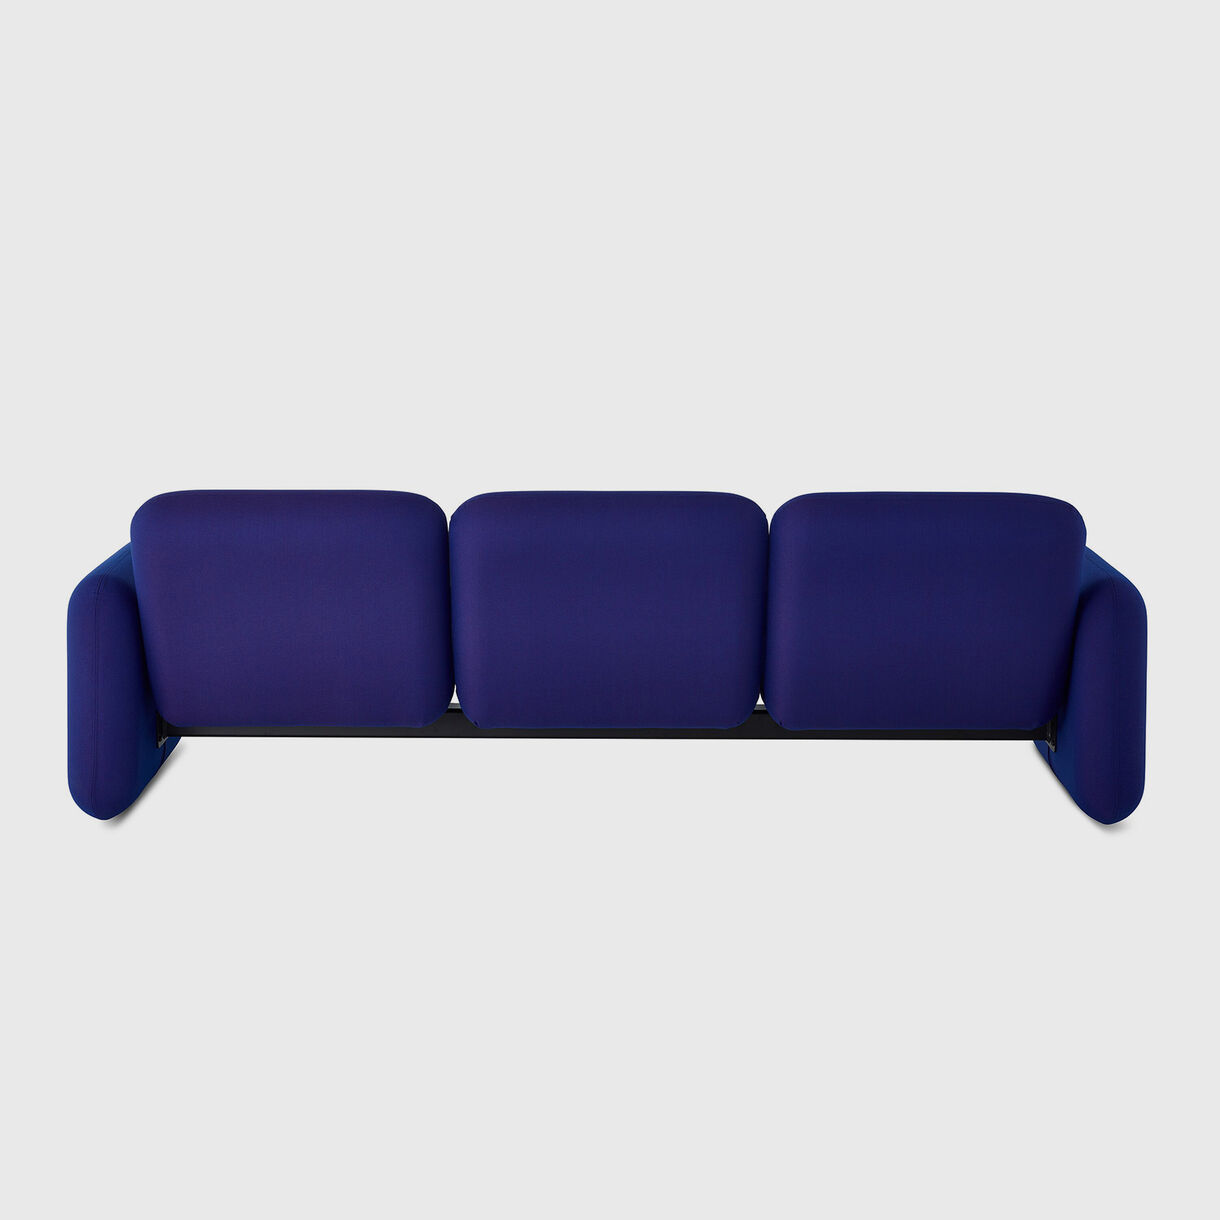 Wilkes Modular Sofa Group, 3 Seater